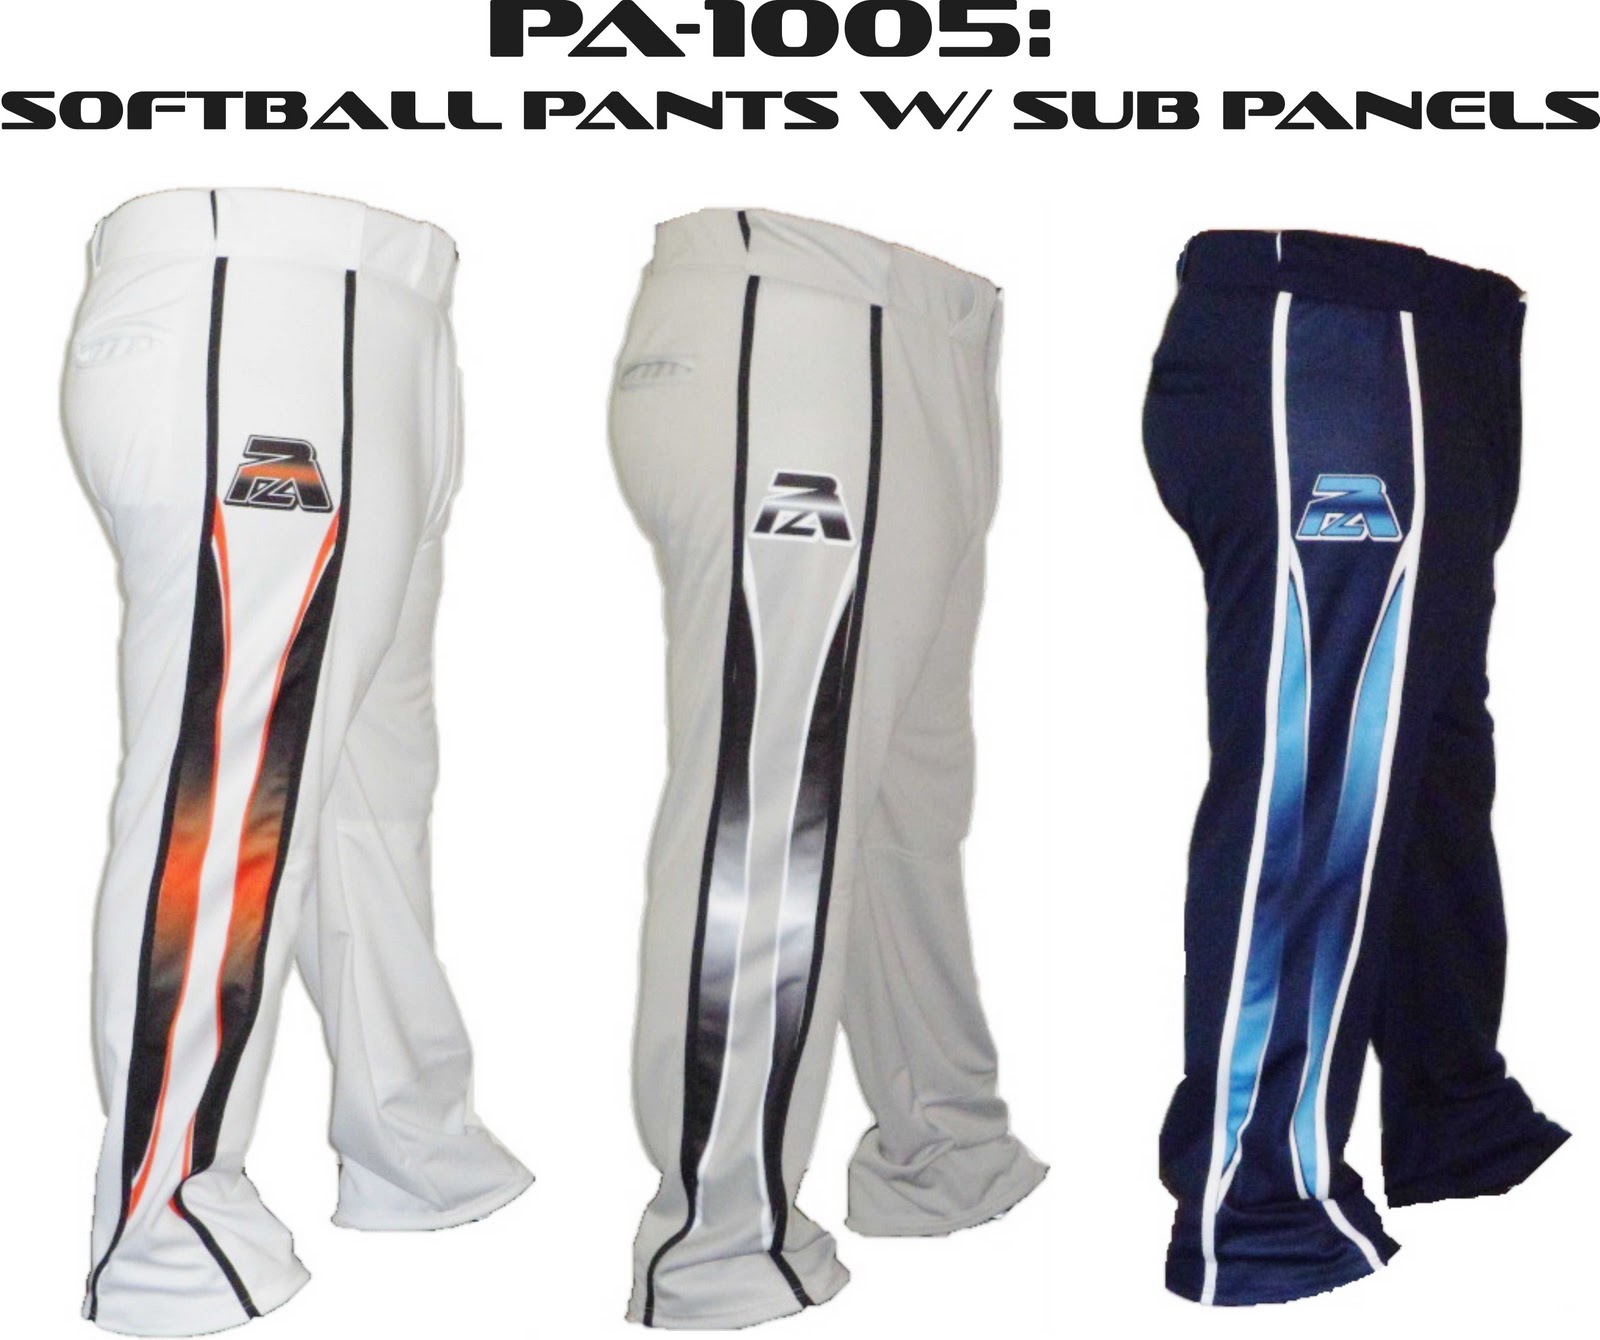 Full Length Softball Pants